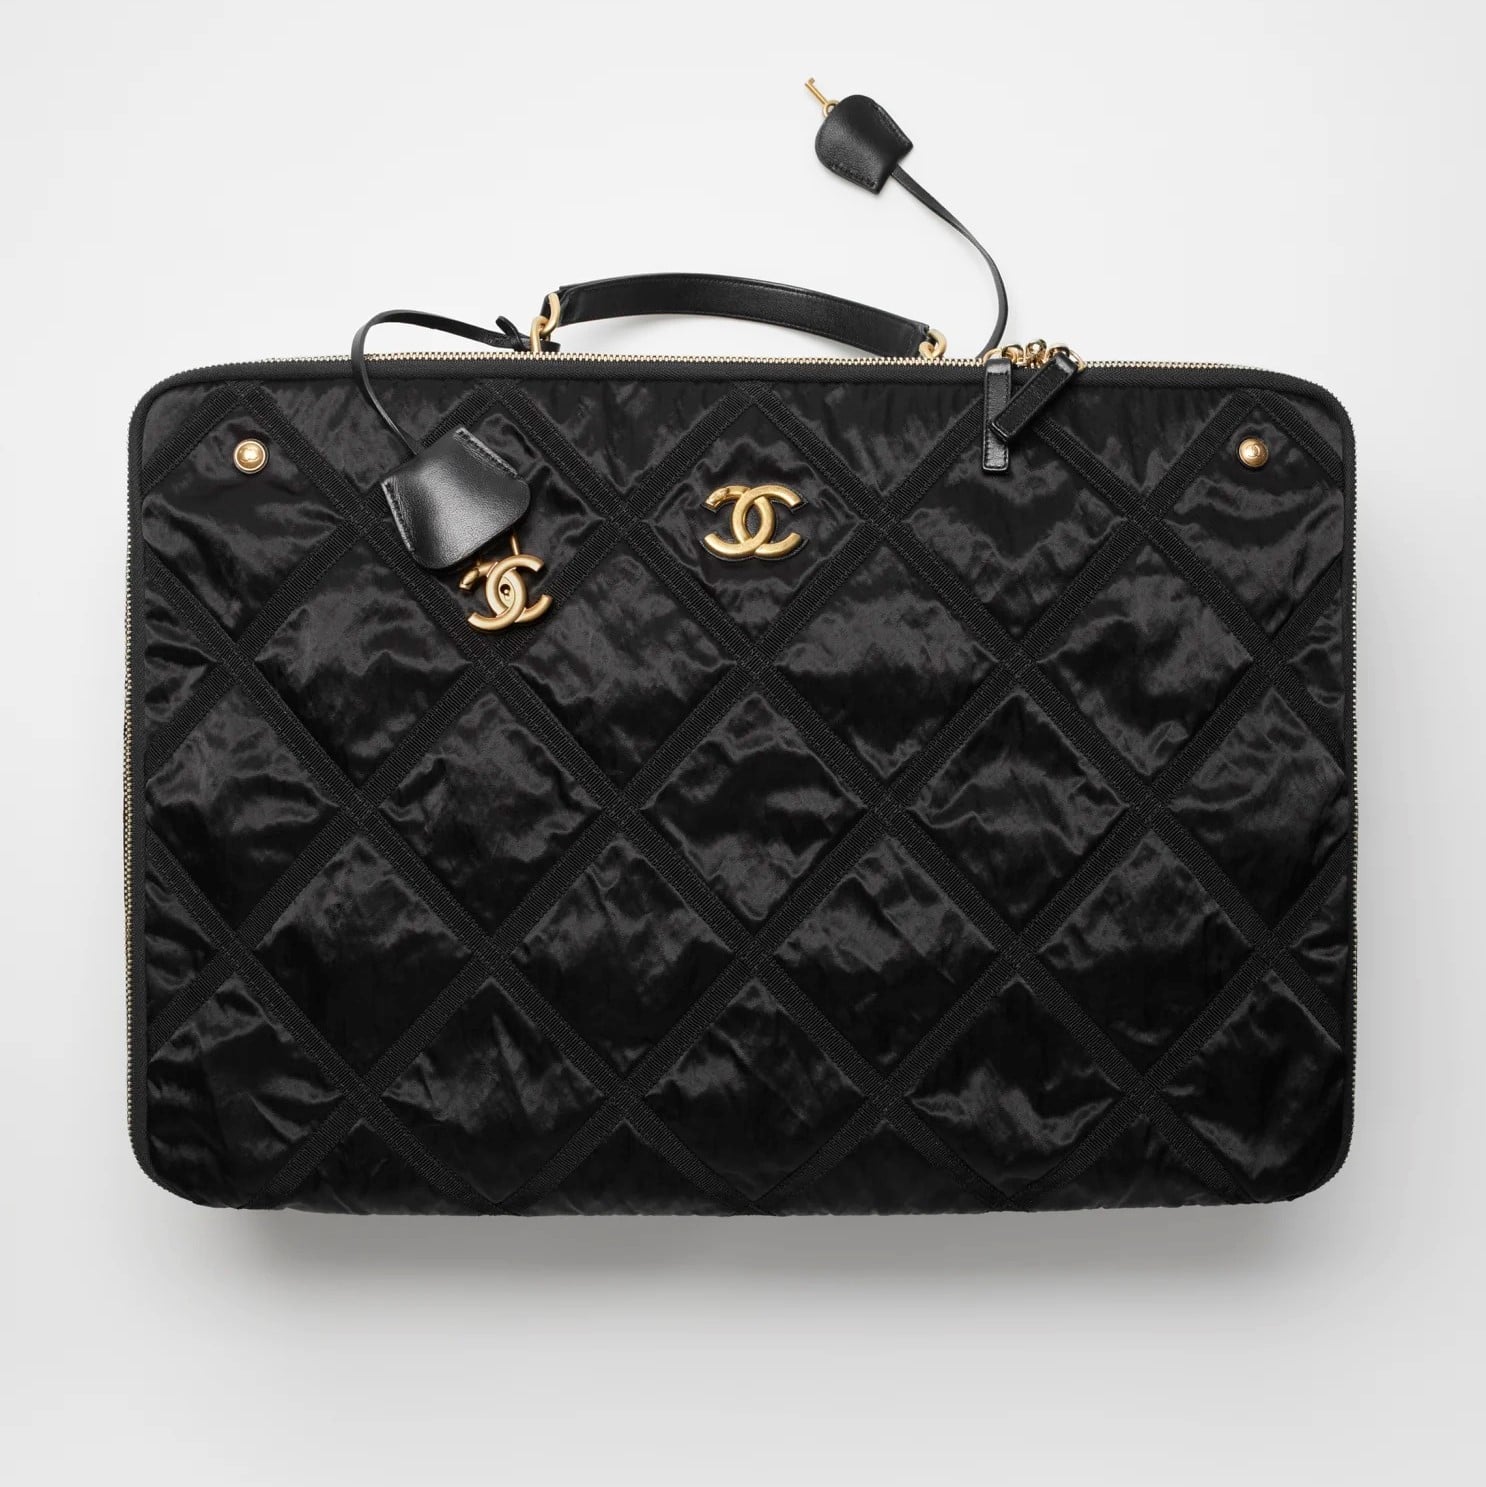 Chanel Black Nylon Large Travel Bag